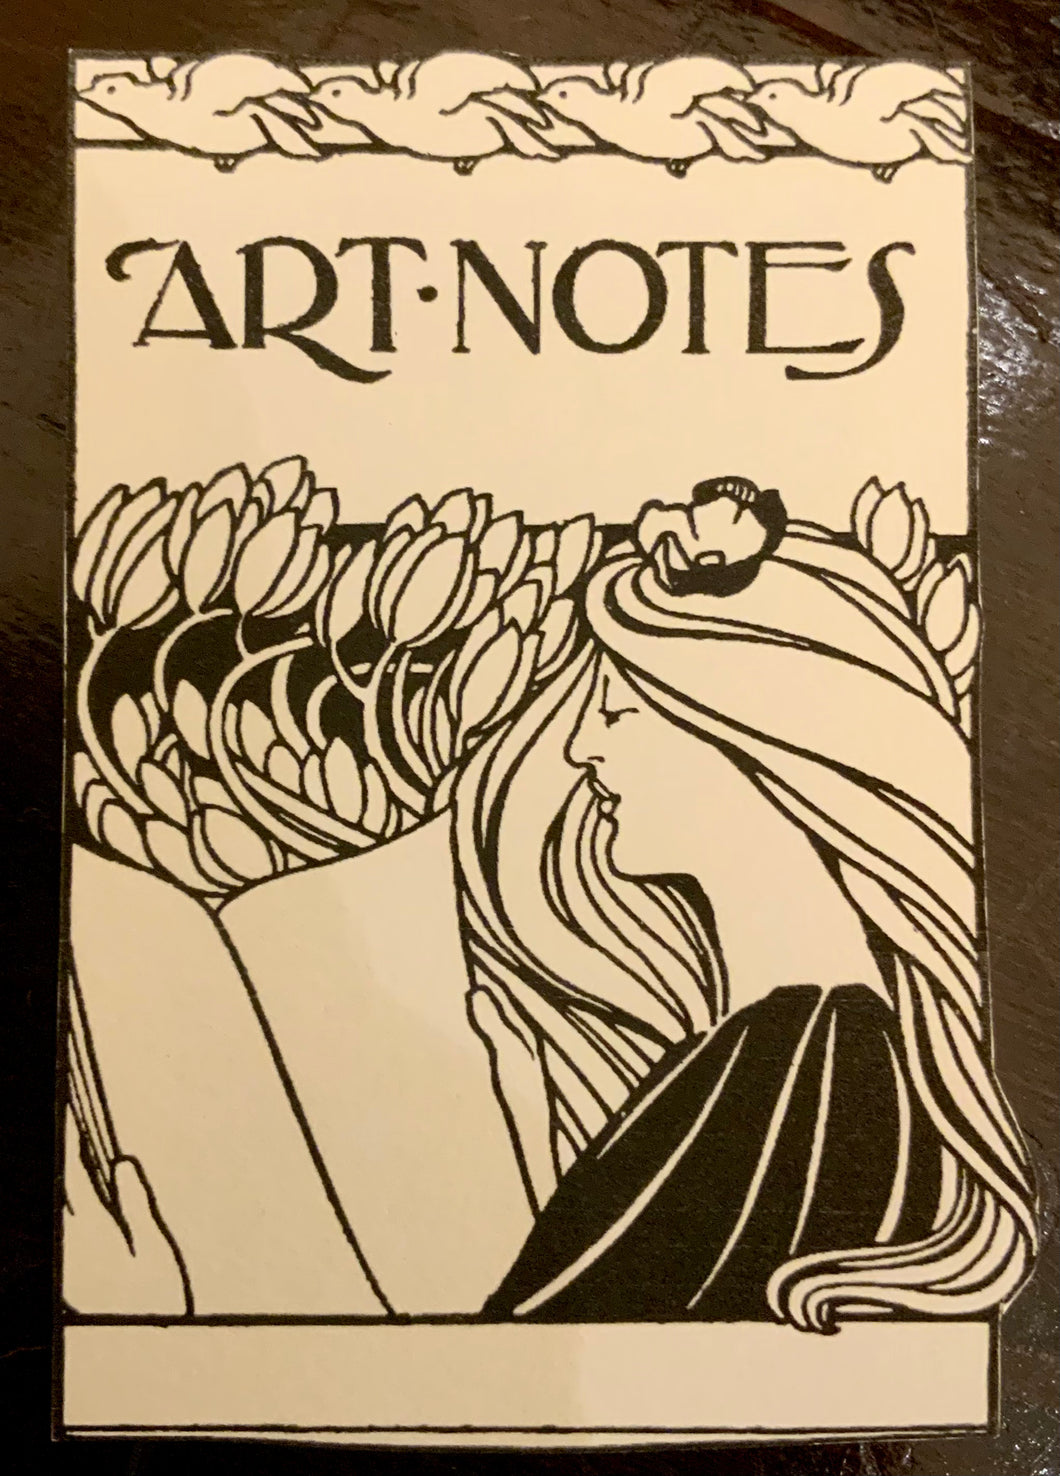 Book Plate - Art Notes